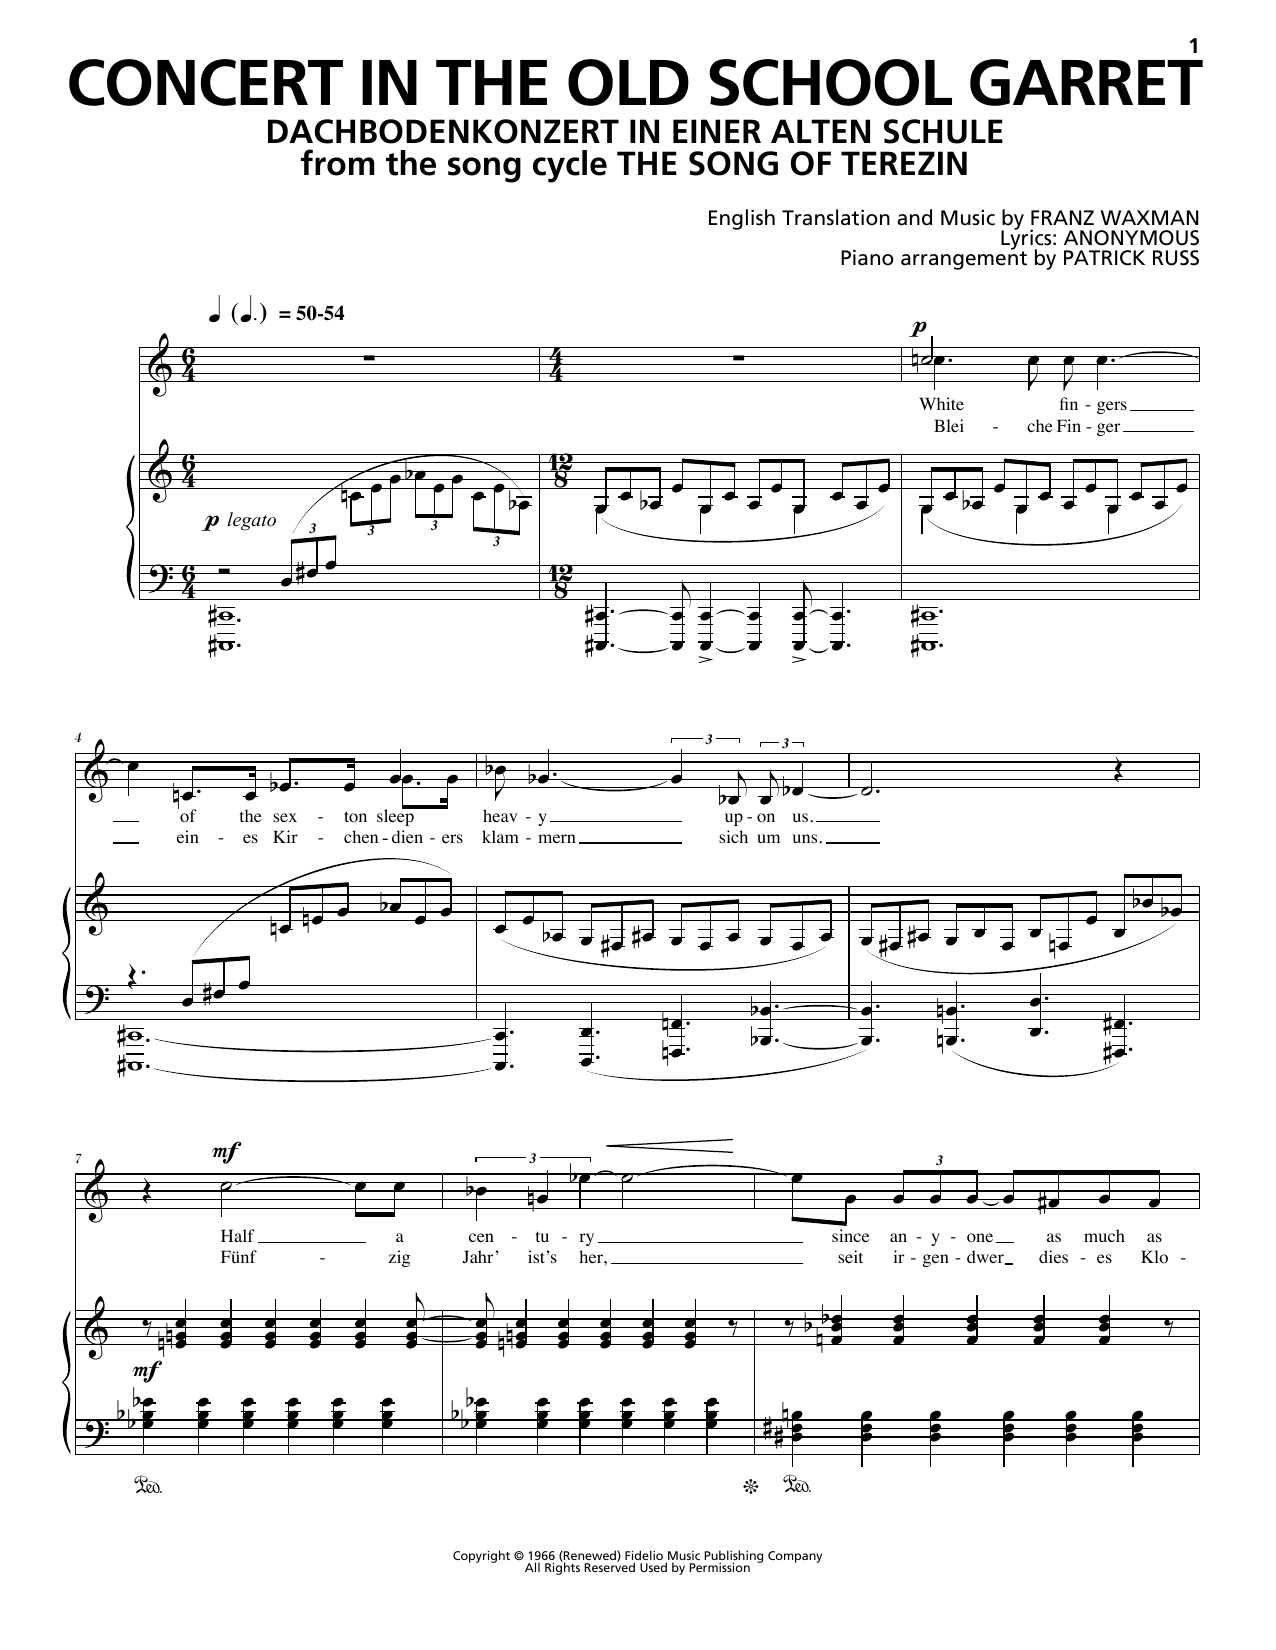 Franz Waxman Concert In The Old School Garret (Dachbodenkonzert In Einer Alten Schule) Sheet Music Notes & Chords for Piano & Vocal - Download or Print PDF